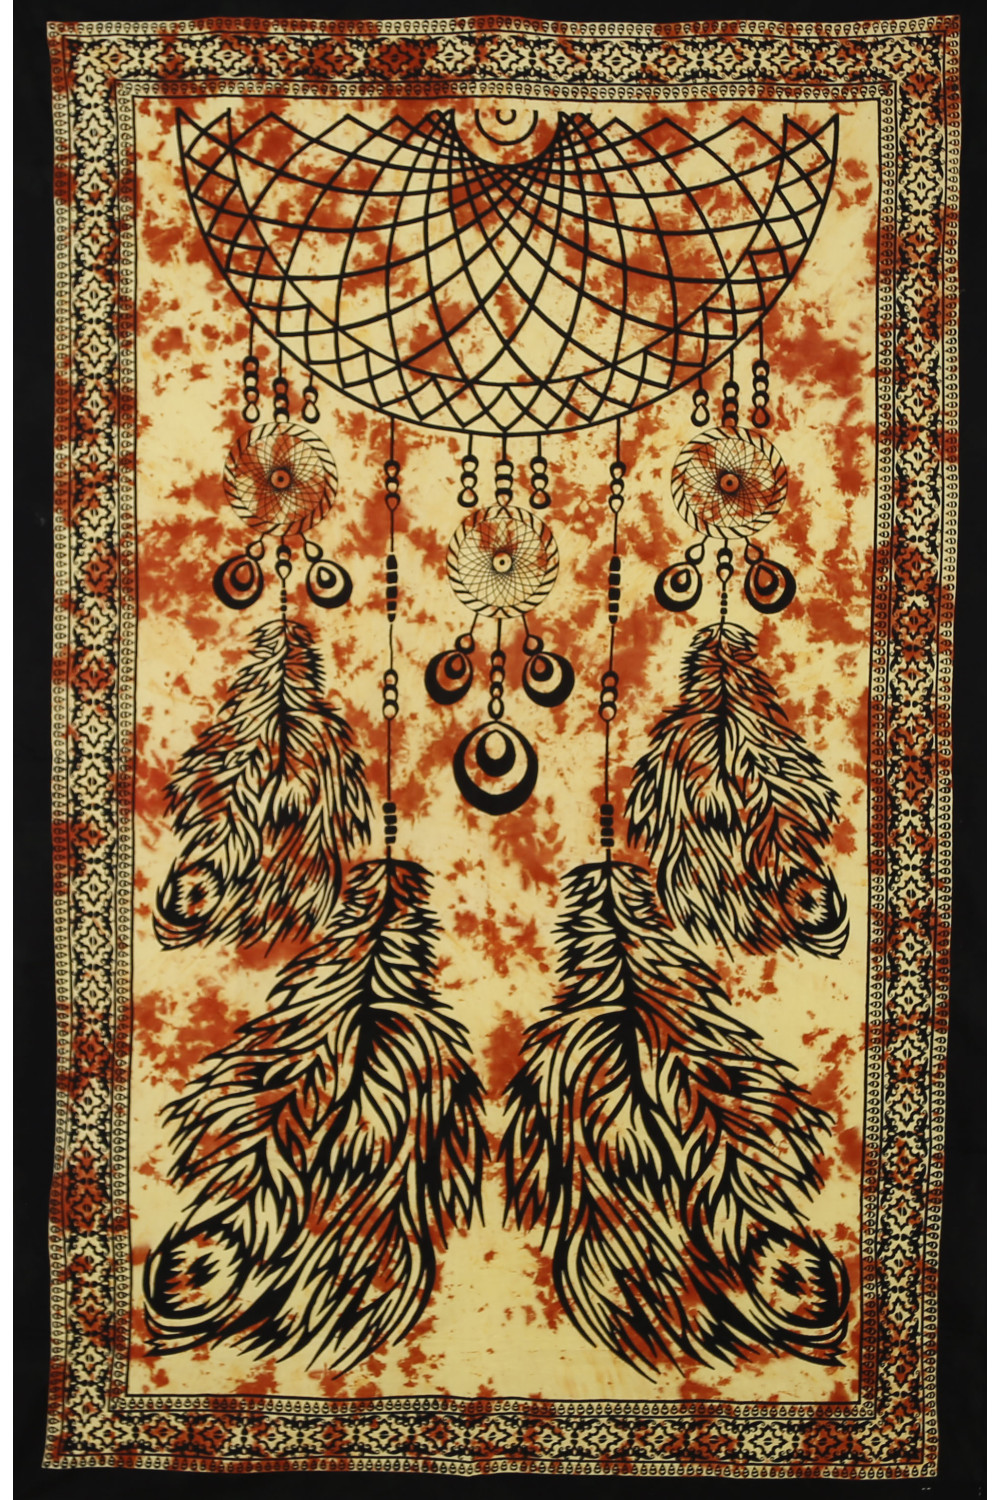 Zest For Life Orange Dreamcatcher Tapestry 52x80" 